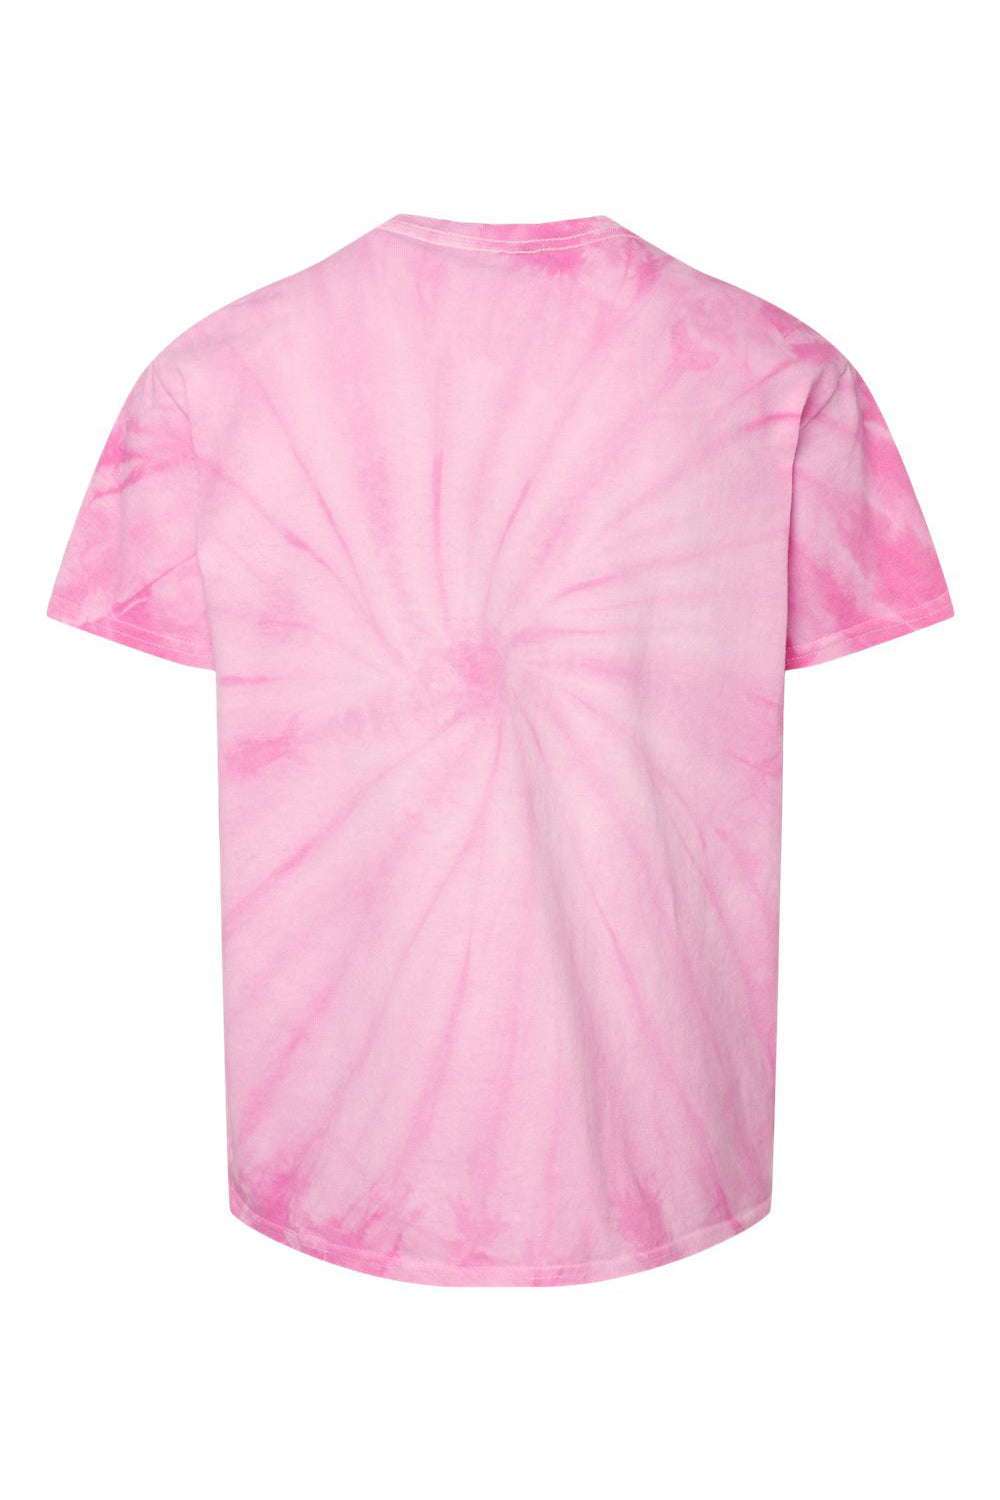 Dyenomite 20BCY Youth Cyclone Pinwheel Tie Dyed Short Sleeve Crewneck T-Shirt Pink Flat Back